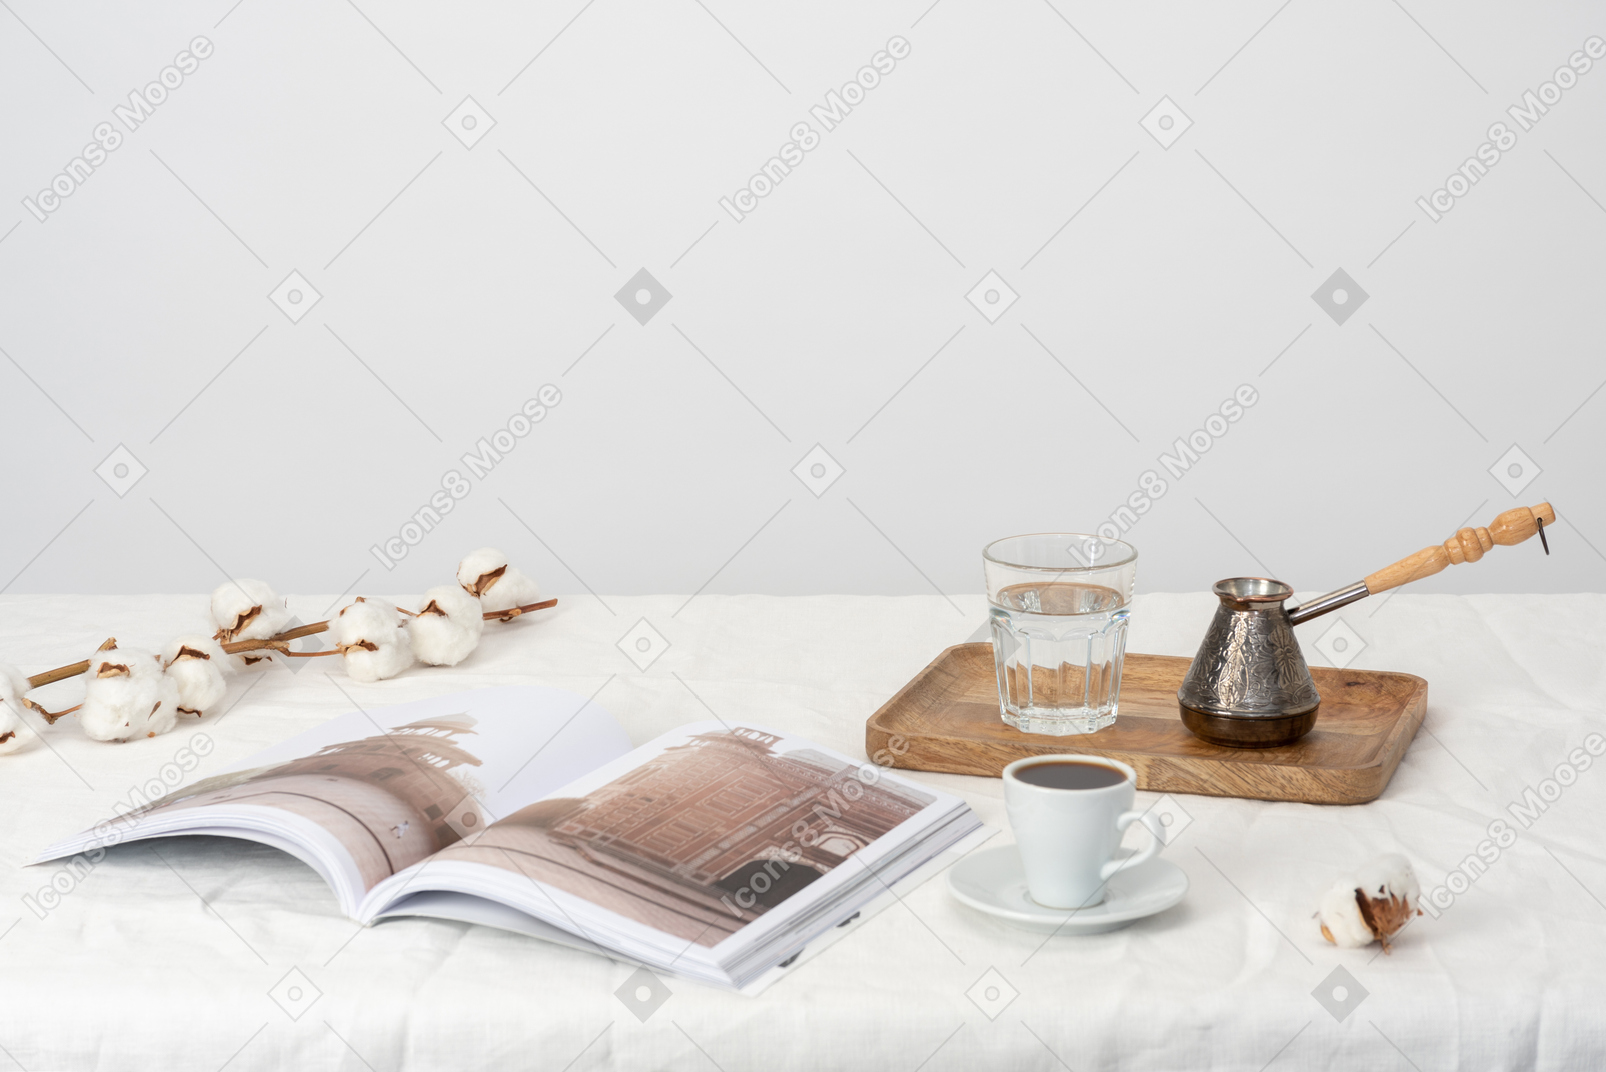 Cezve와 나무 쟁반에 물 한잔, 커피 한잔과 잡지 및 면화 지점